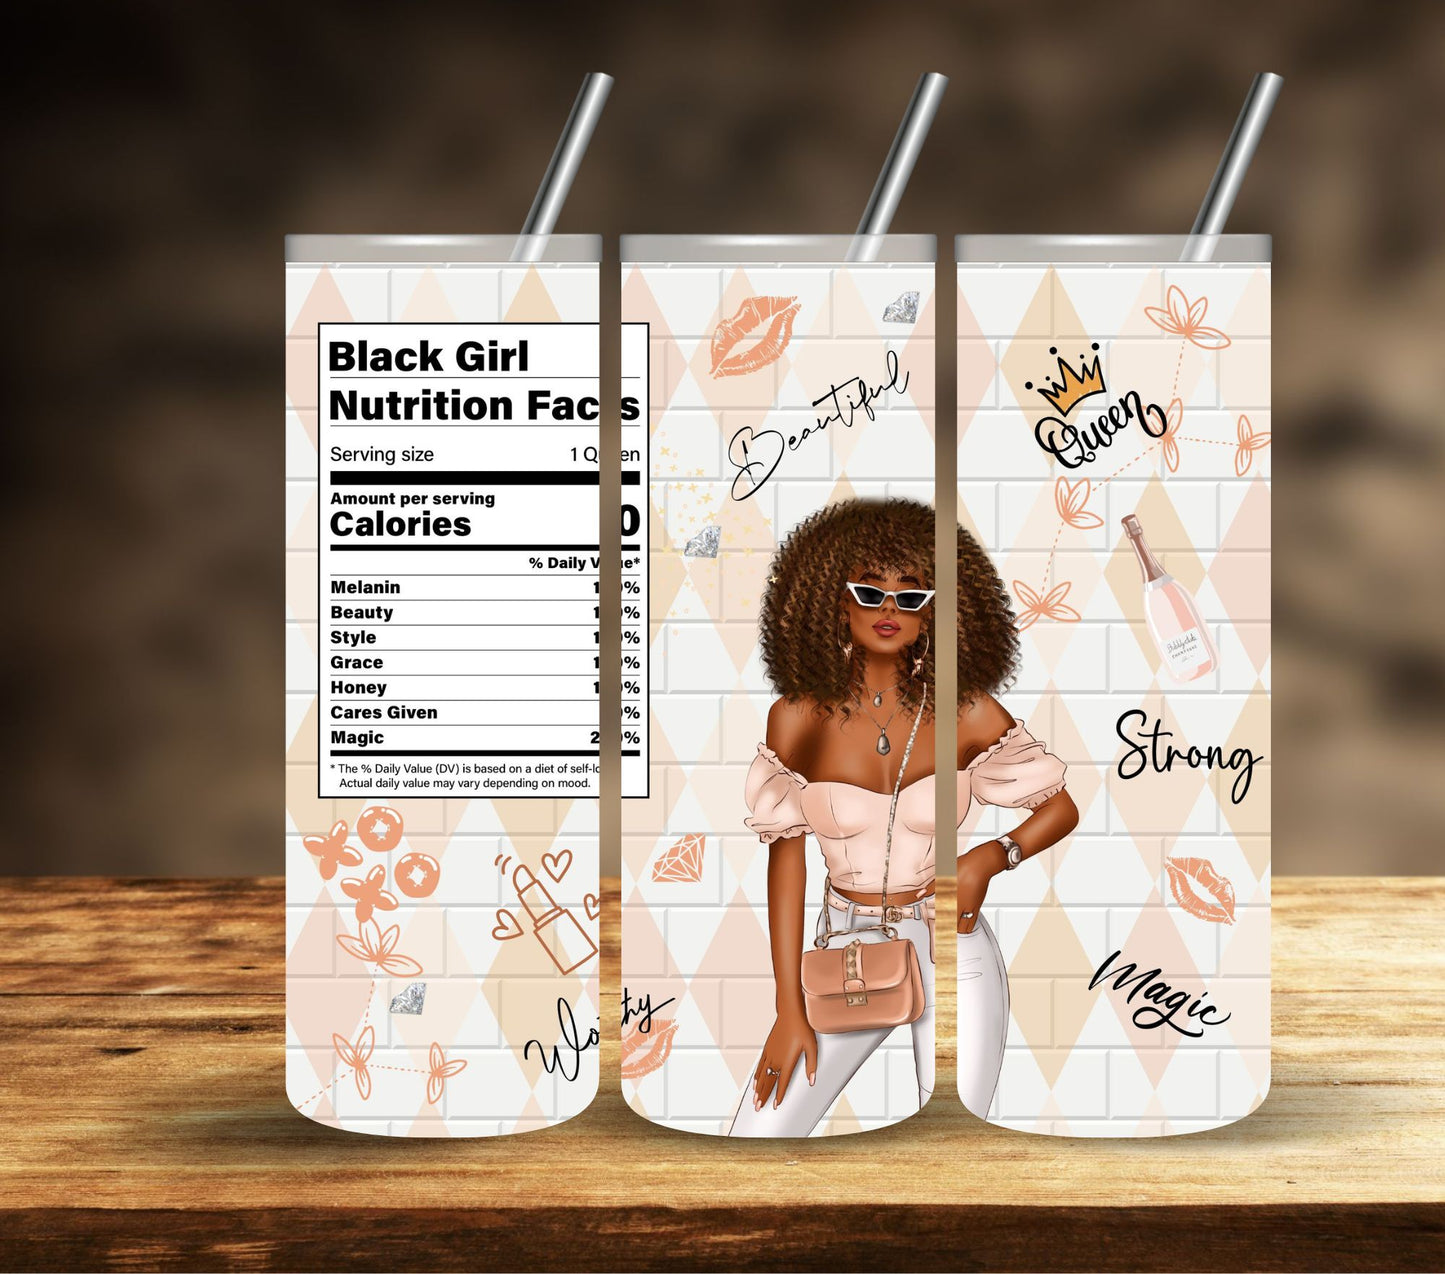 Black Queen Nutrition Facts Vinyl Tumbler wrap- 4 Designs